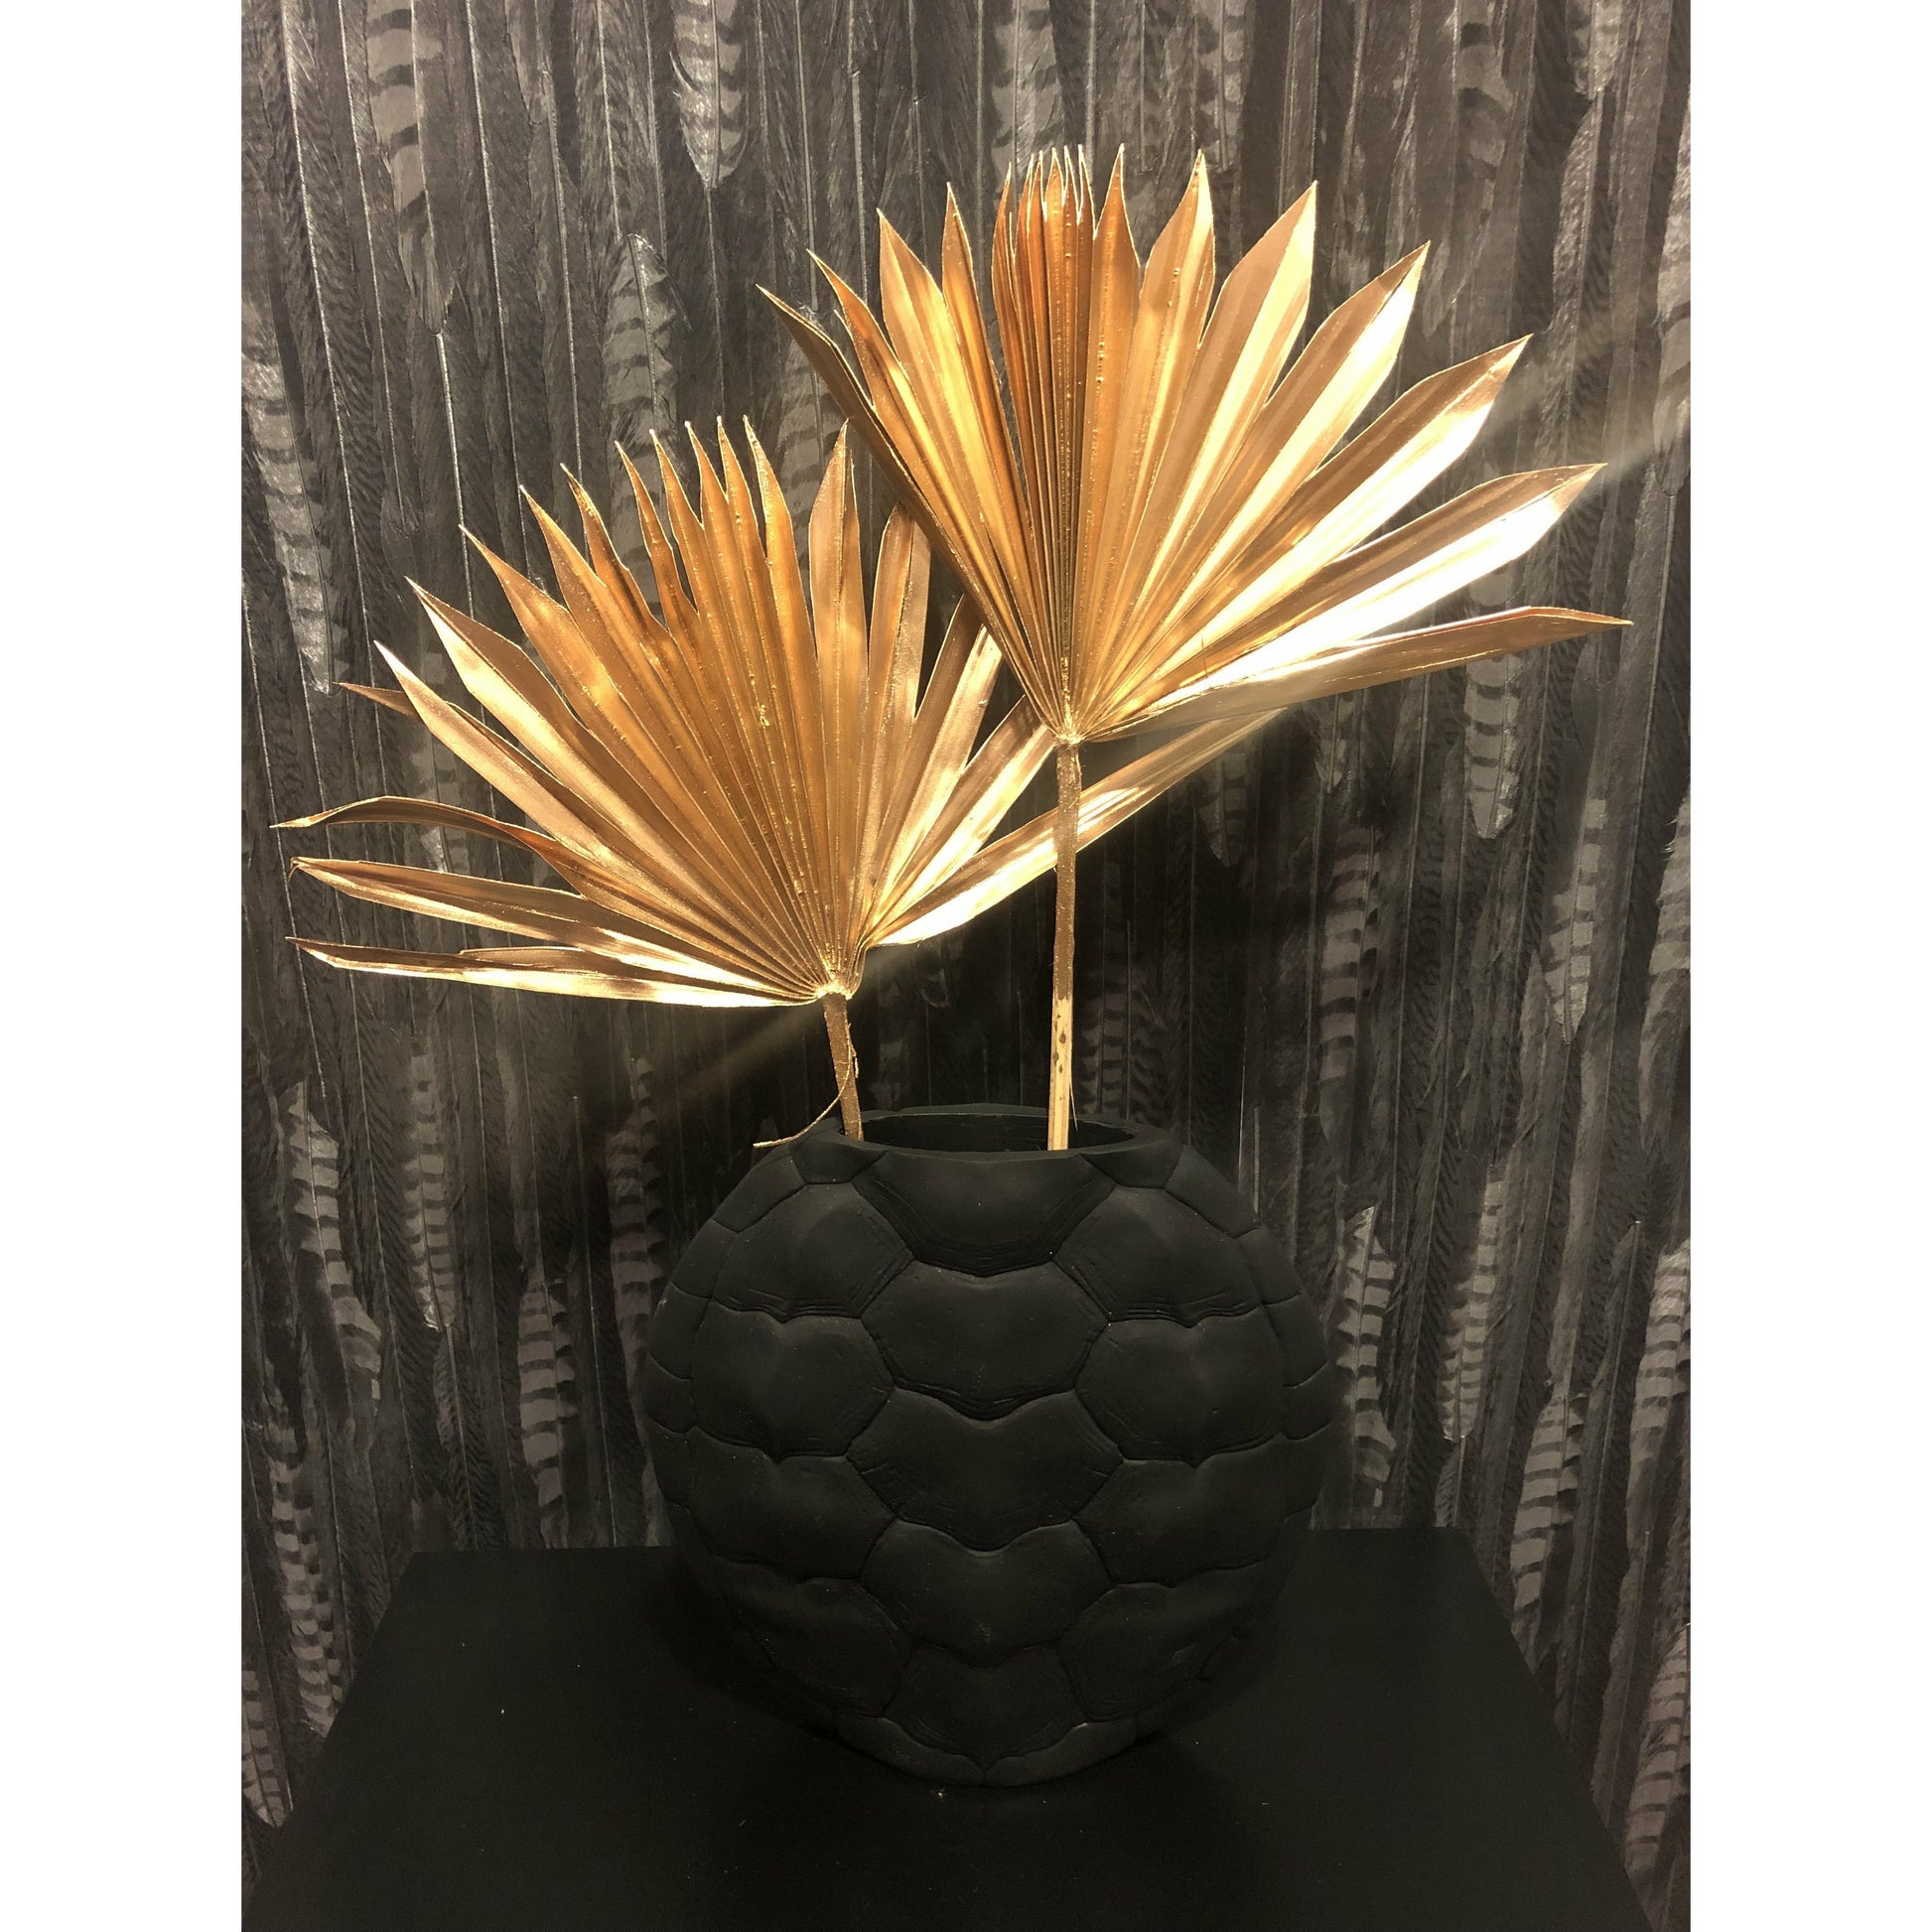 Gedroogde Palmbladeren waaier vorm | Goud Woonunique